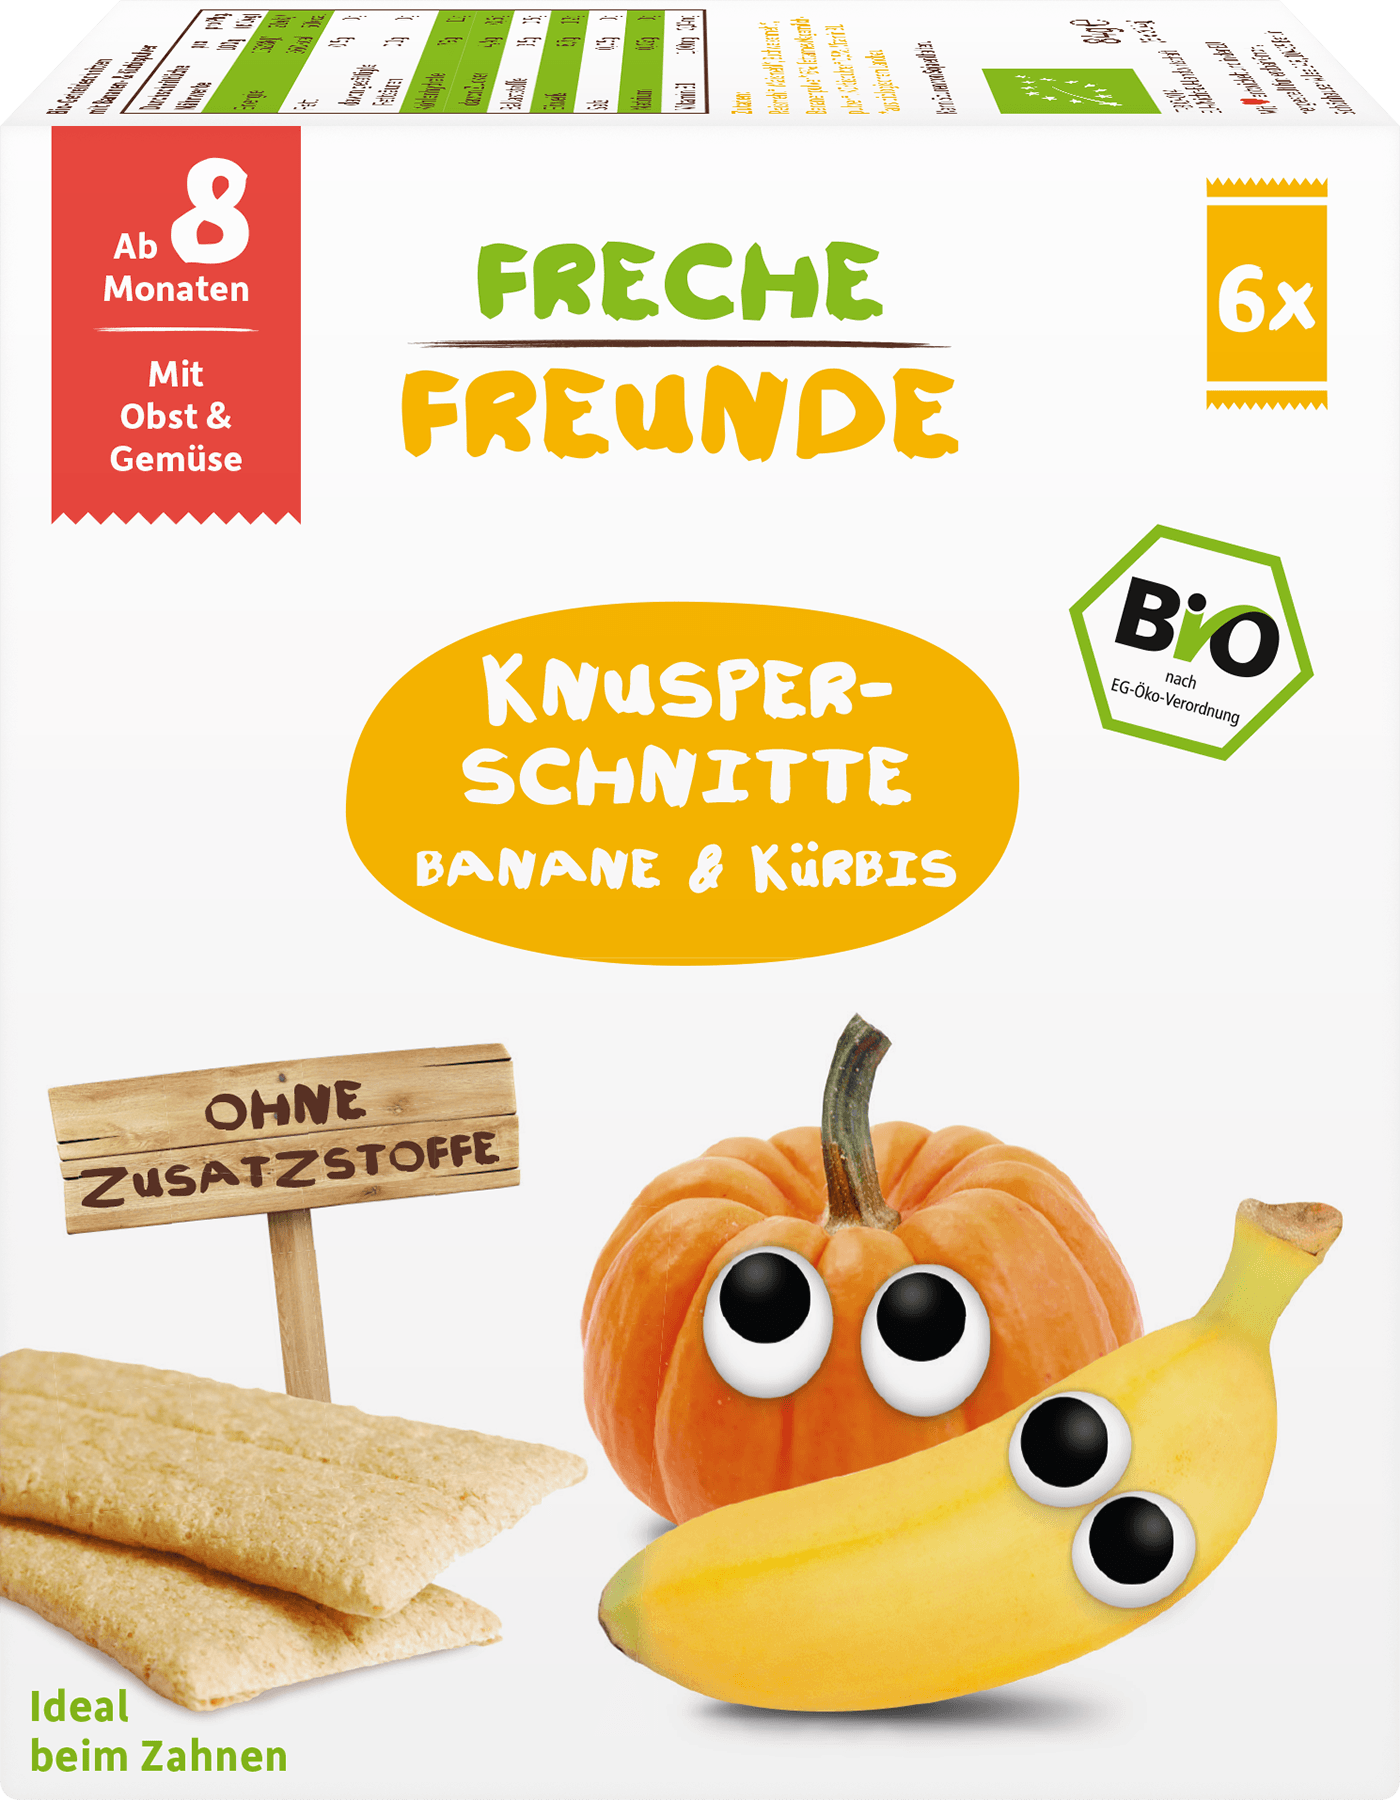 Knusper-Schnitte “Banane & Kürbis”